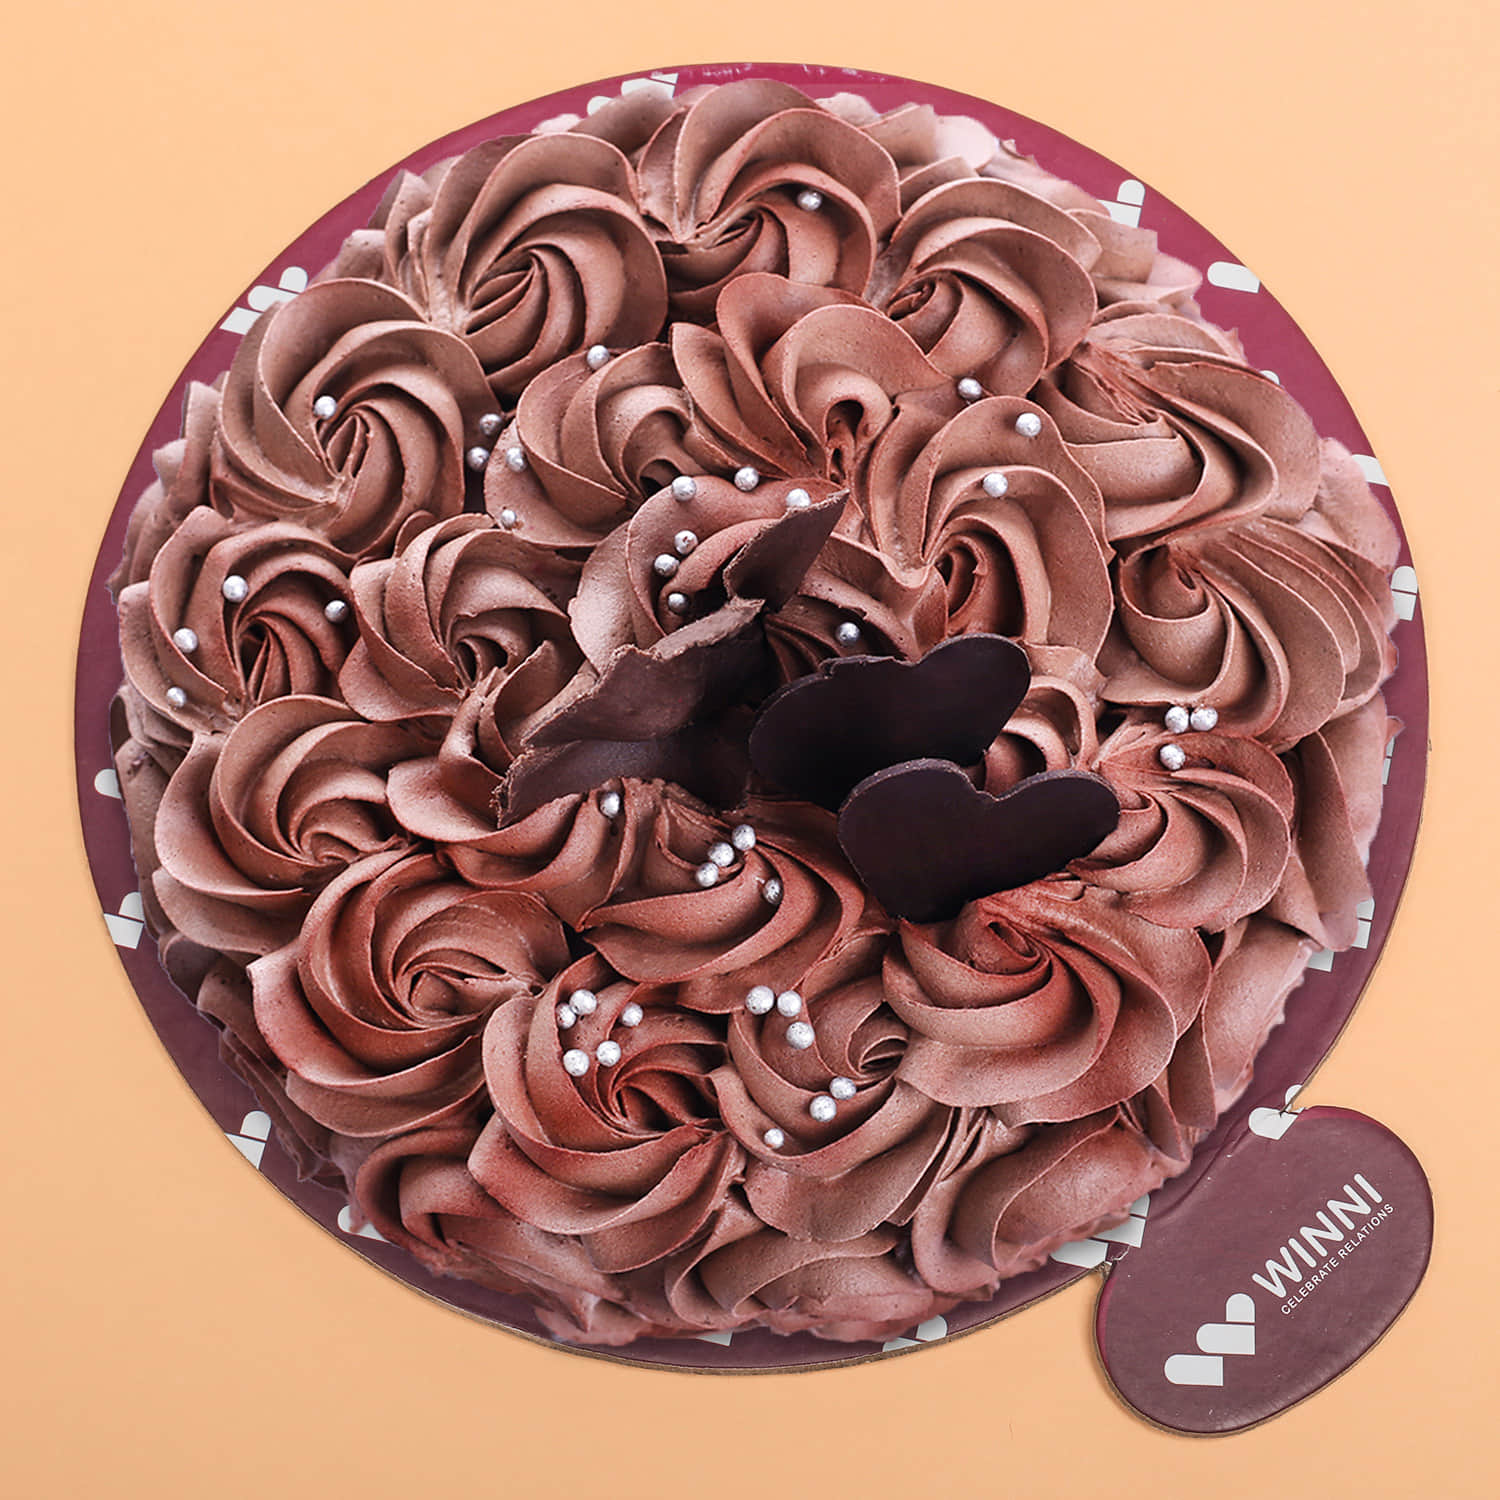 Red Rose Chocolate Cake – Baking Institute Retail